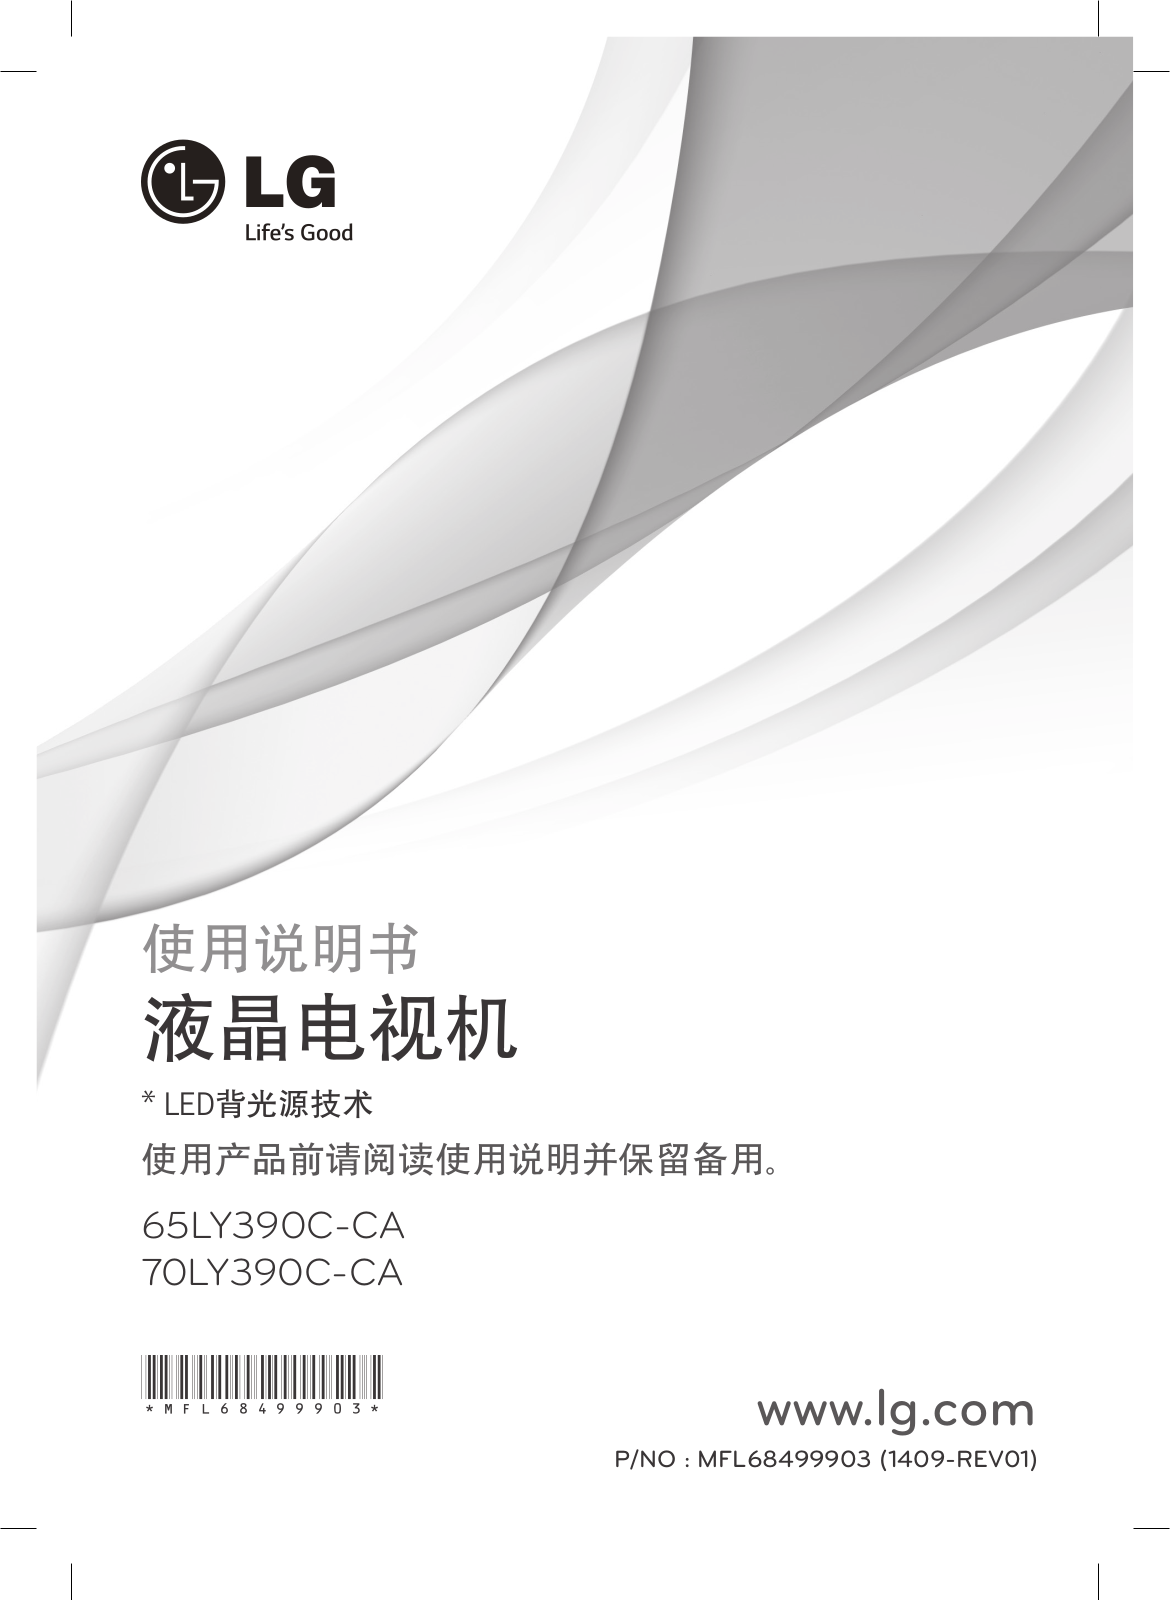 LG 70LY390C-CA Product Manual